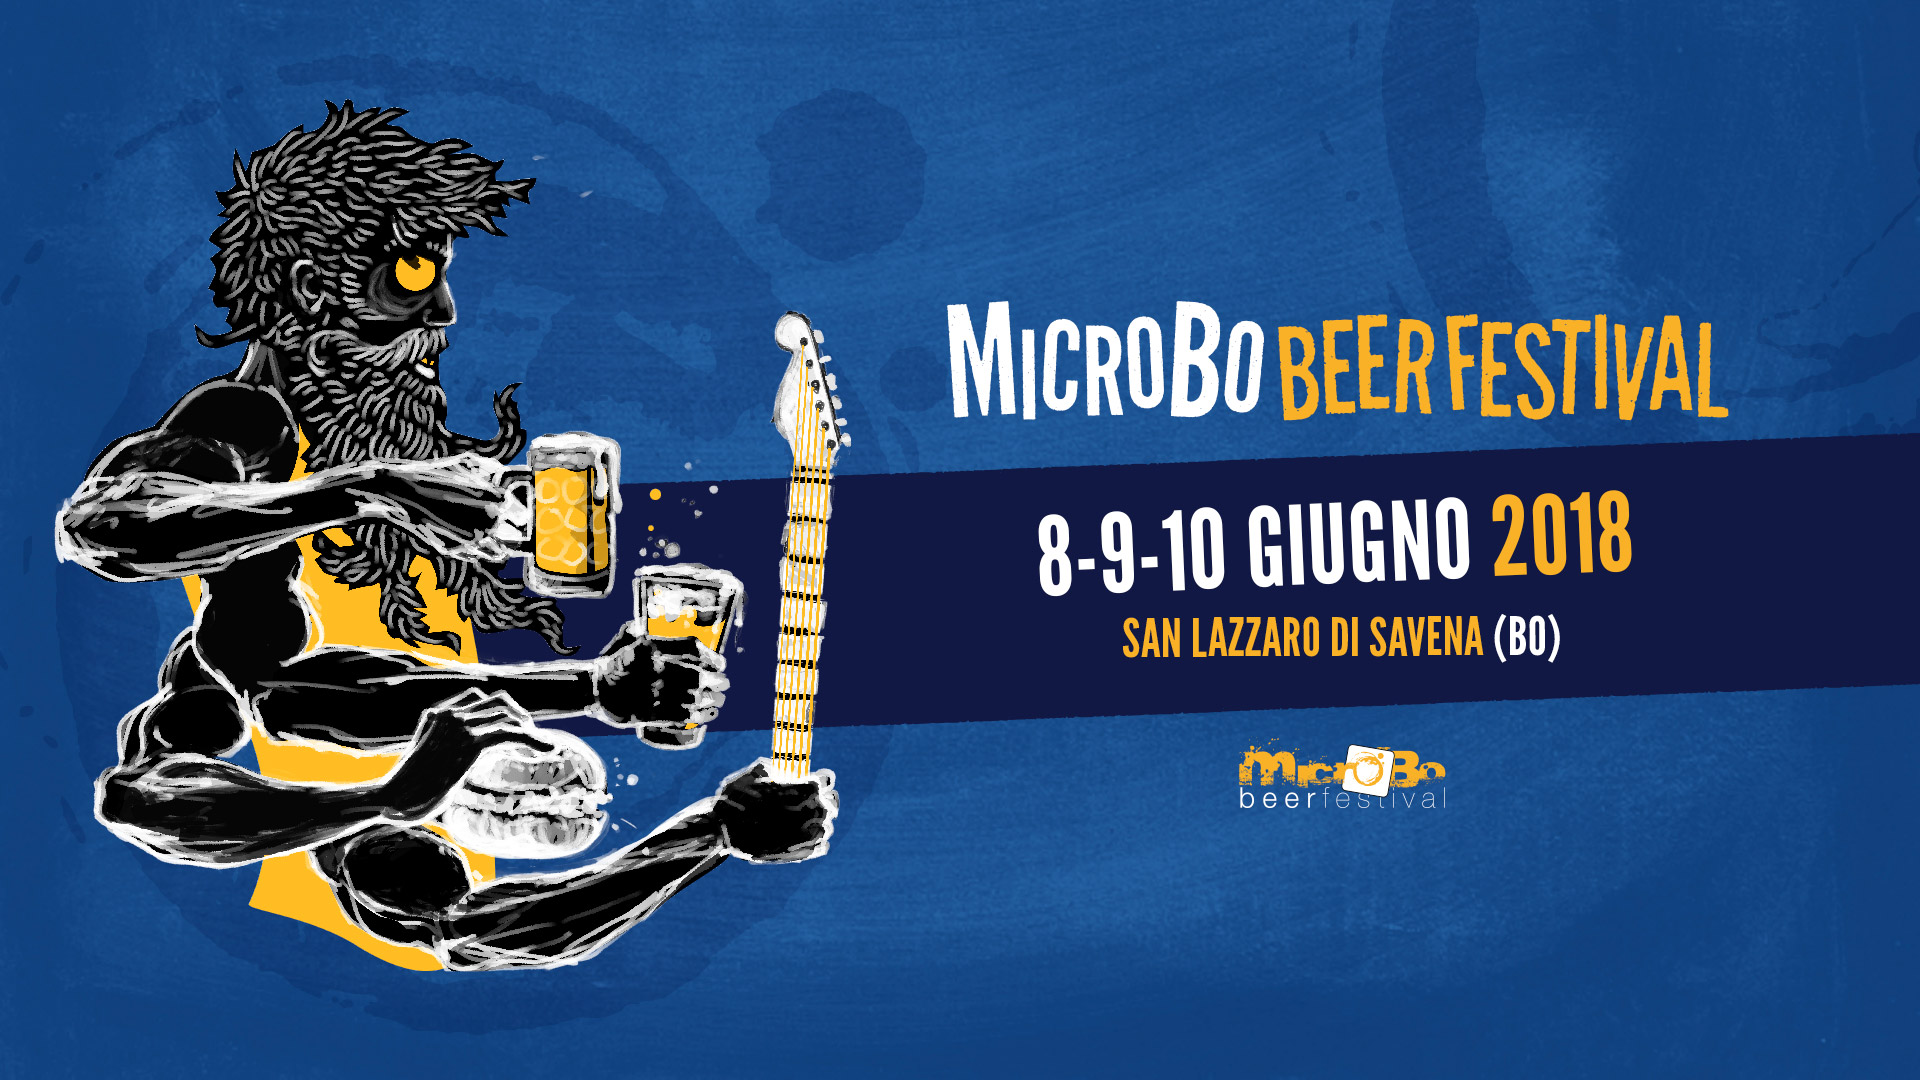 MICROBO BEER FESTIVAL: la birra artigianale invade San Lazzaro